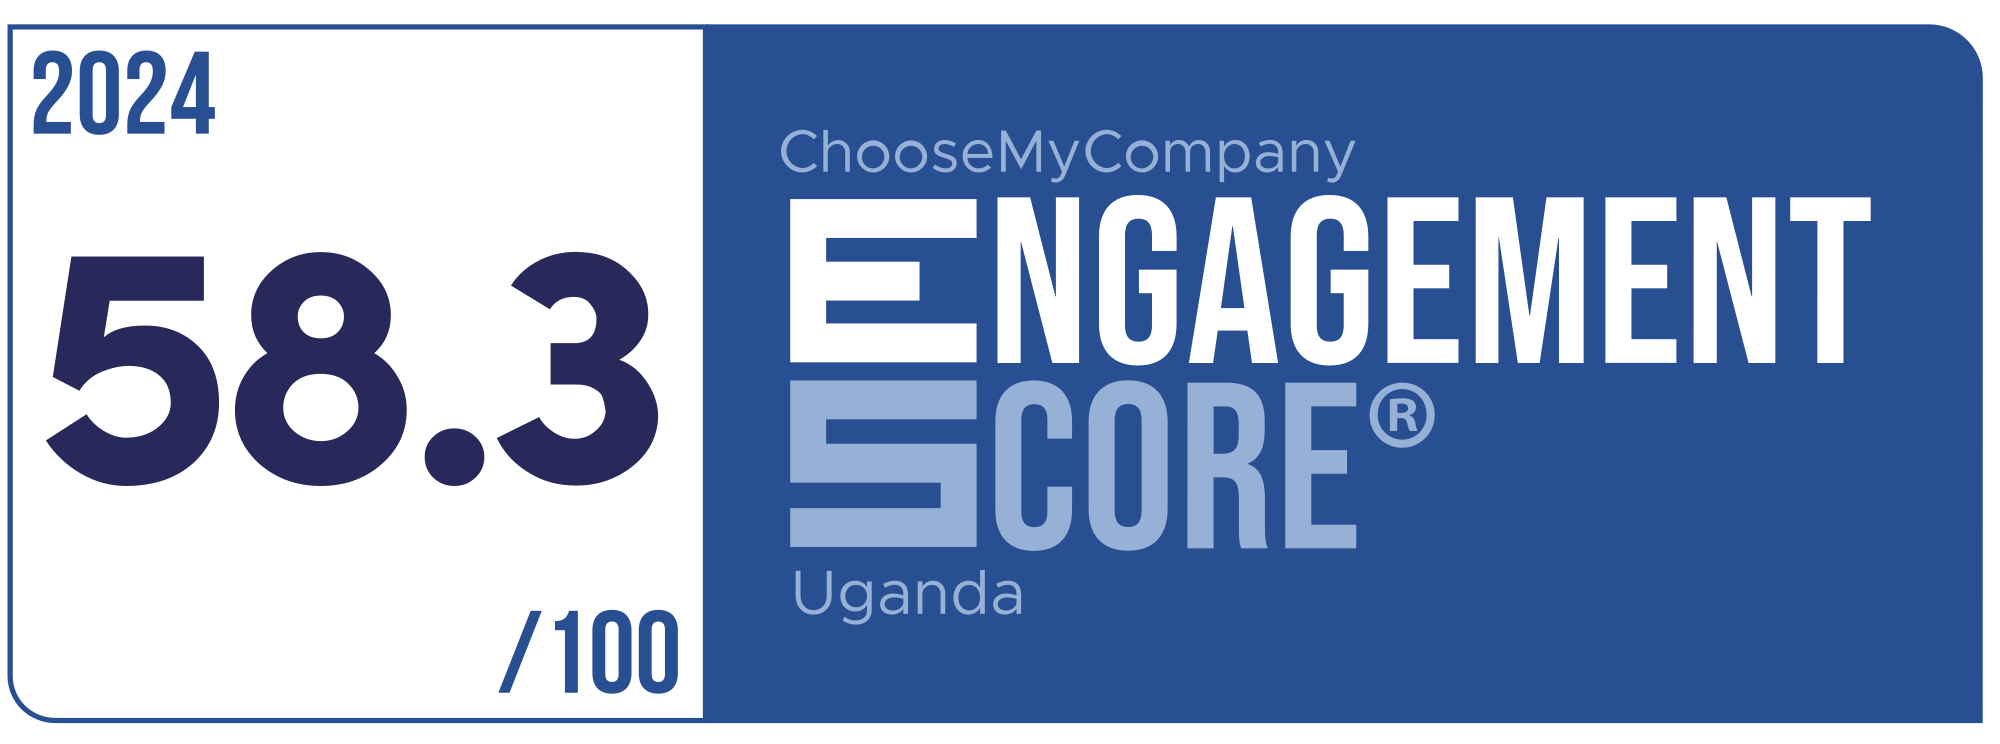 Label Engagement Score 2024 Uganda